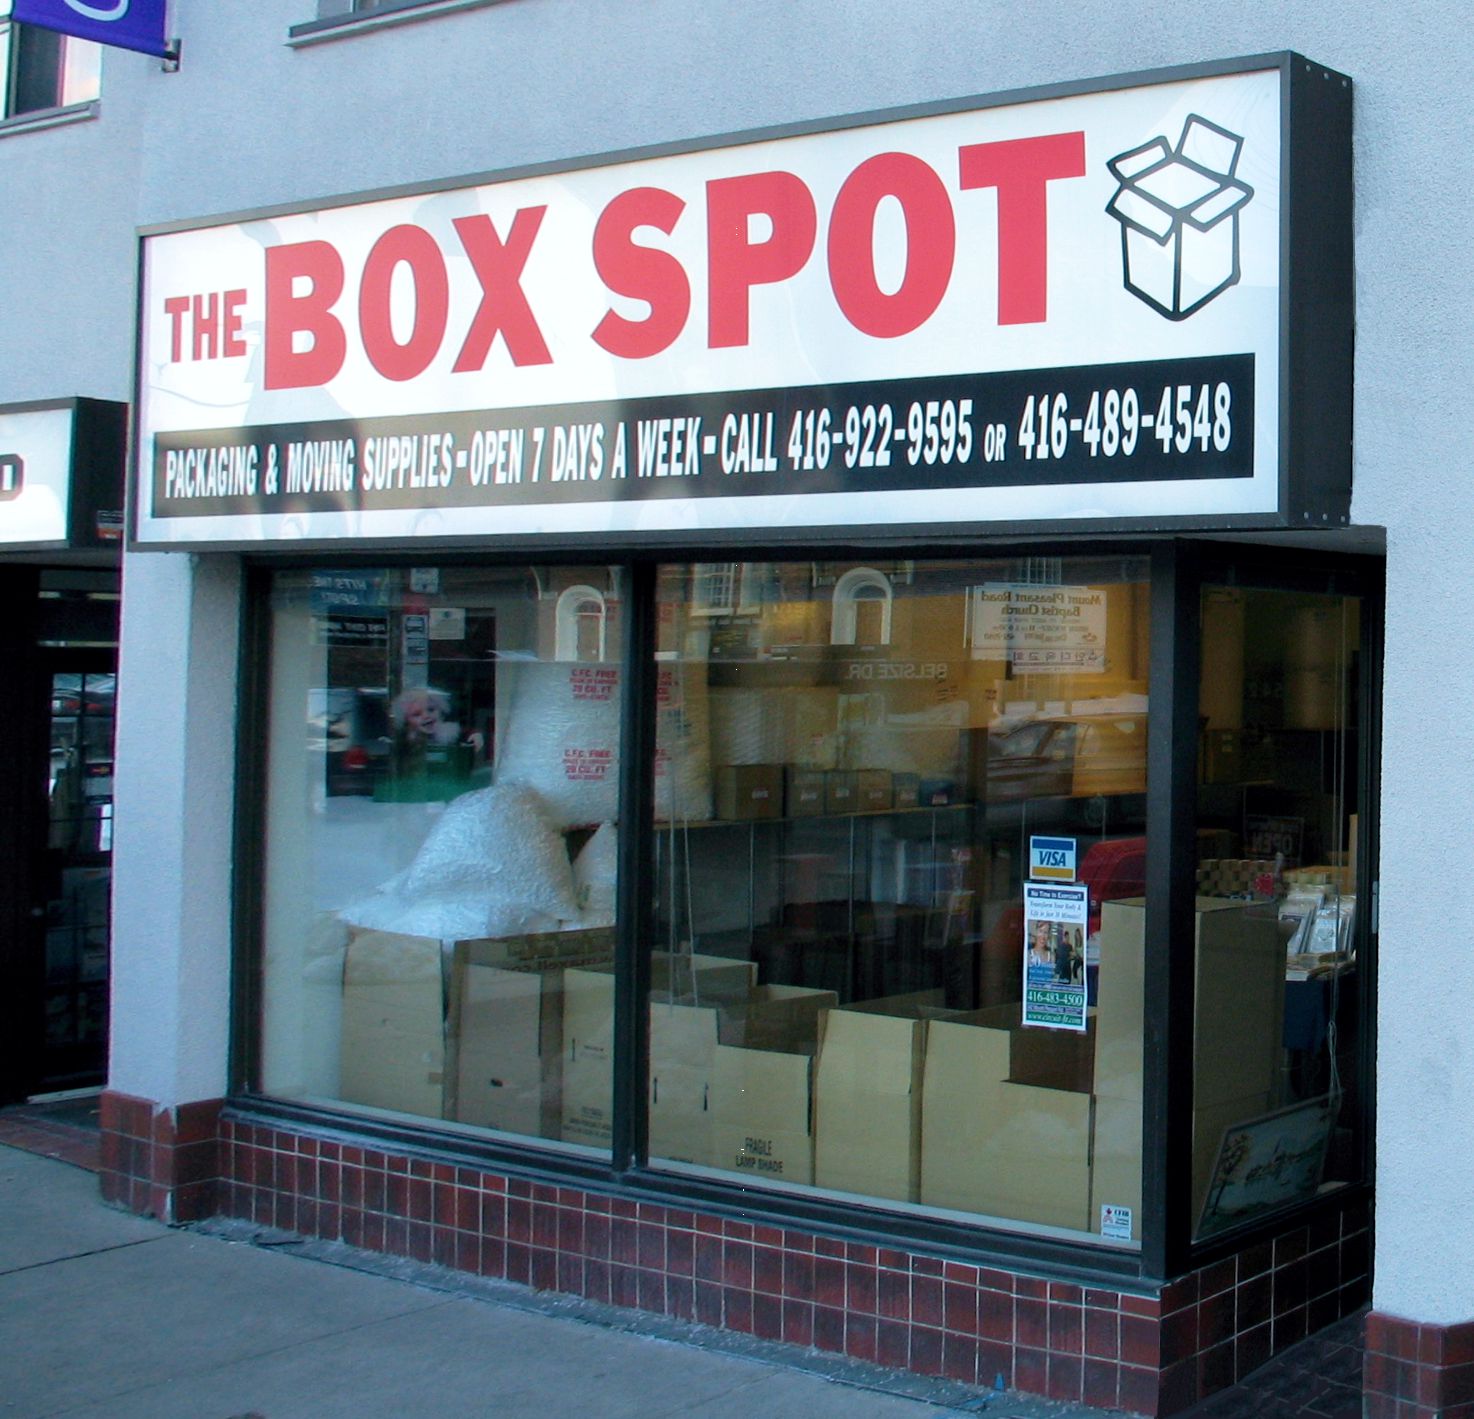 The Box Spot at 542 Mt. Pleasant Road